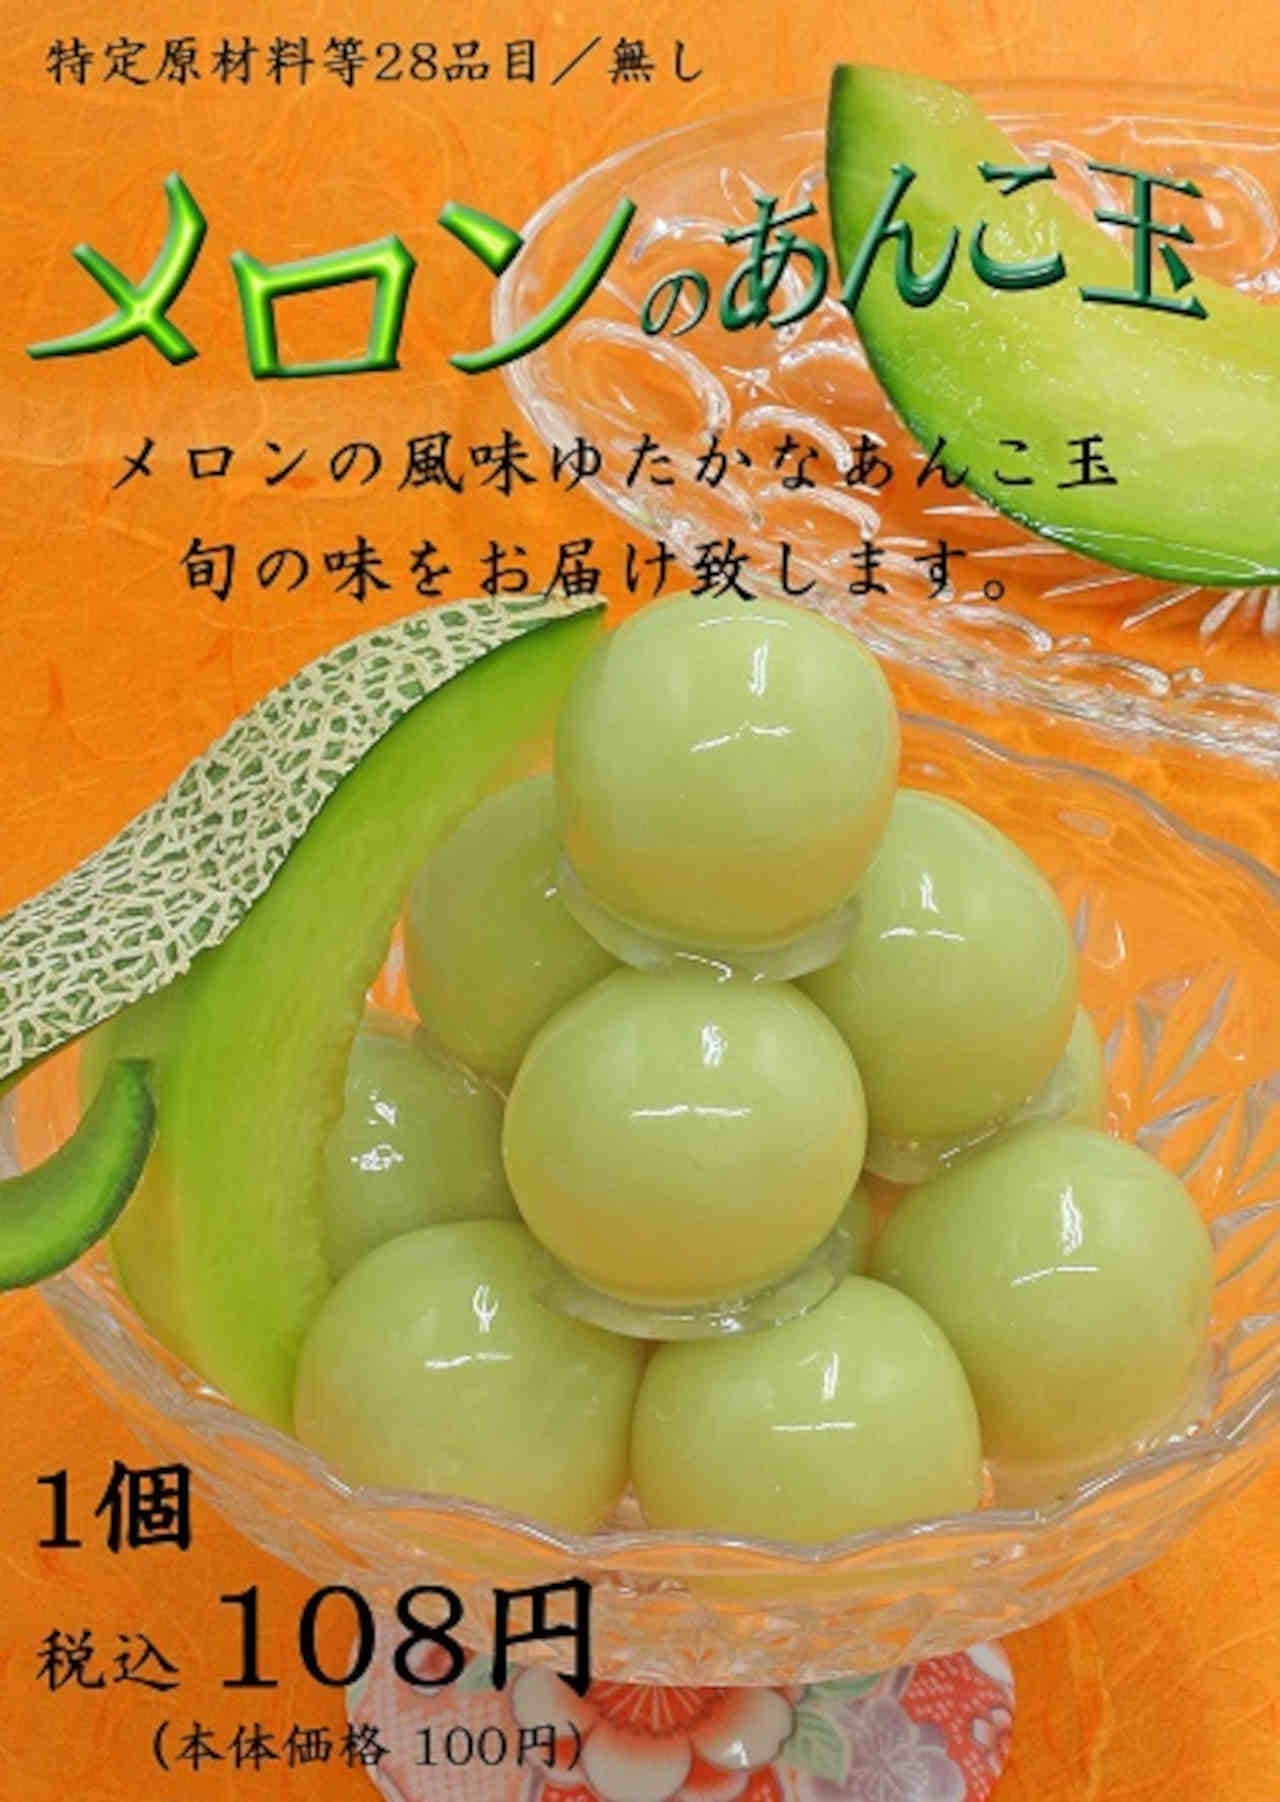 Funawa "Ankotama (melon)" Limited period and quantity